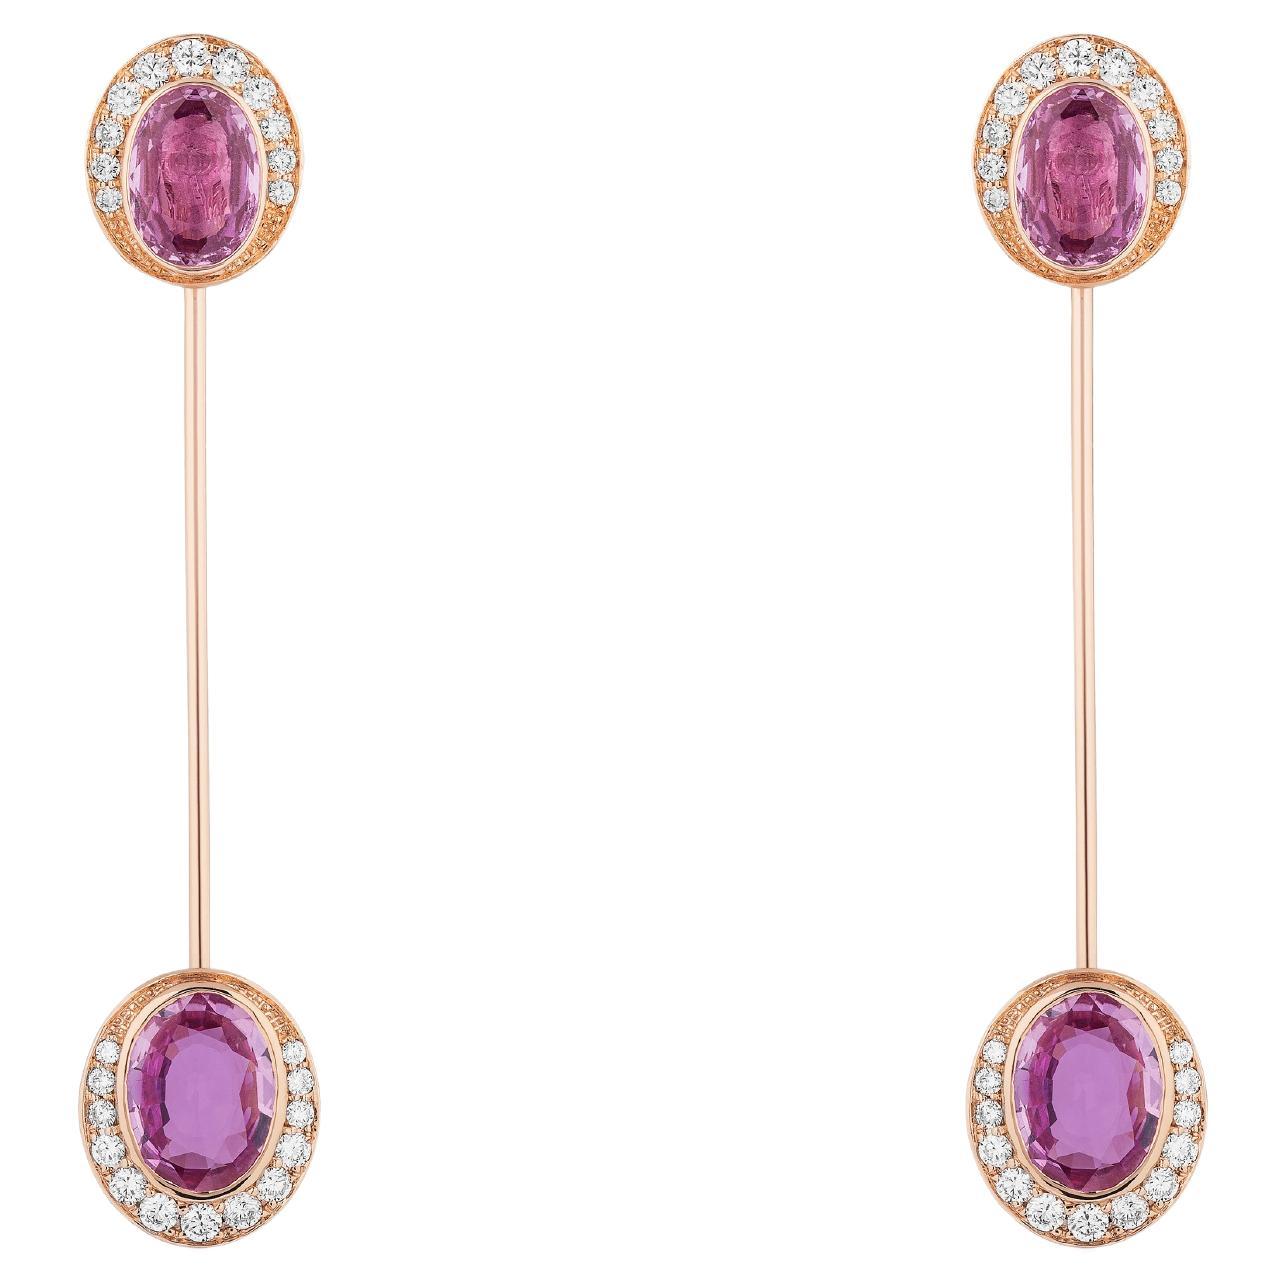 Goshwara Faceted Oval Pink Sapphire Knife Edge & Detachable Earrings